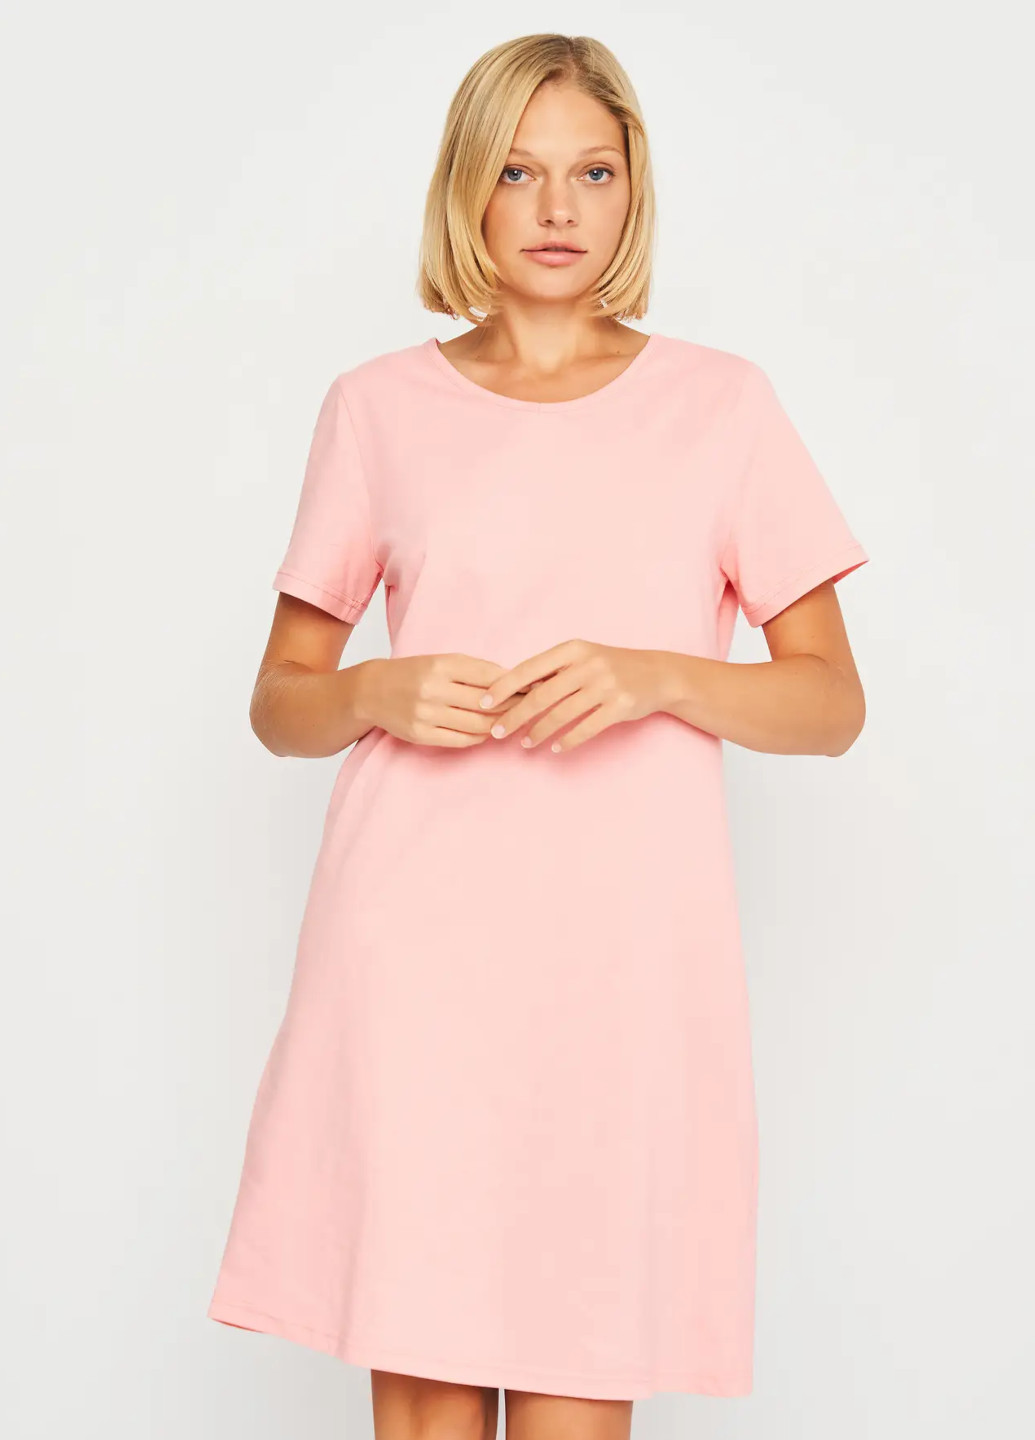 Женская ночная рубашка с коротким рукавом Роза (261485084)